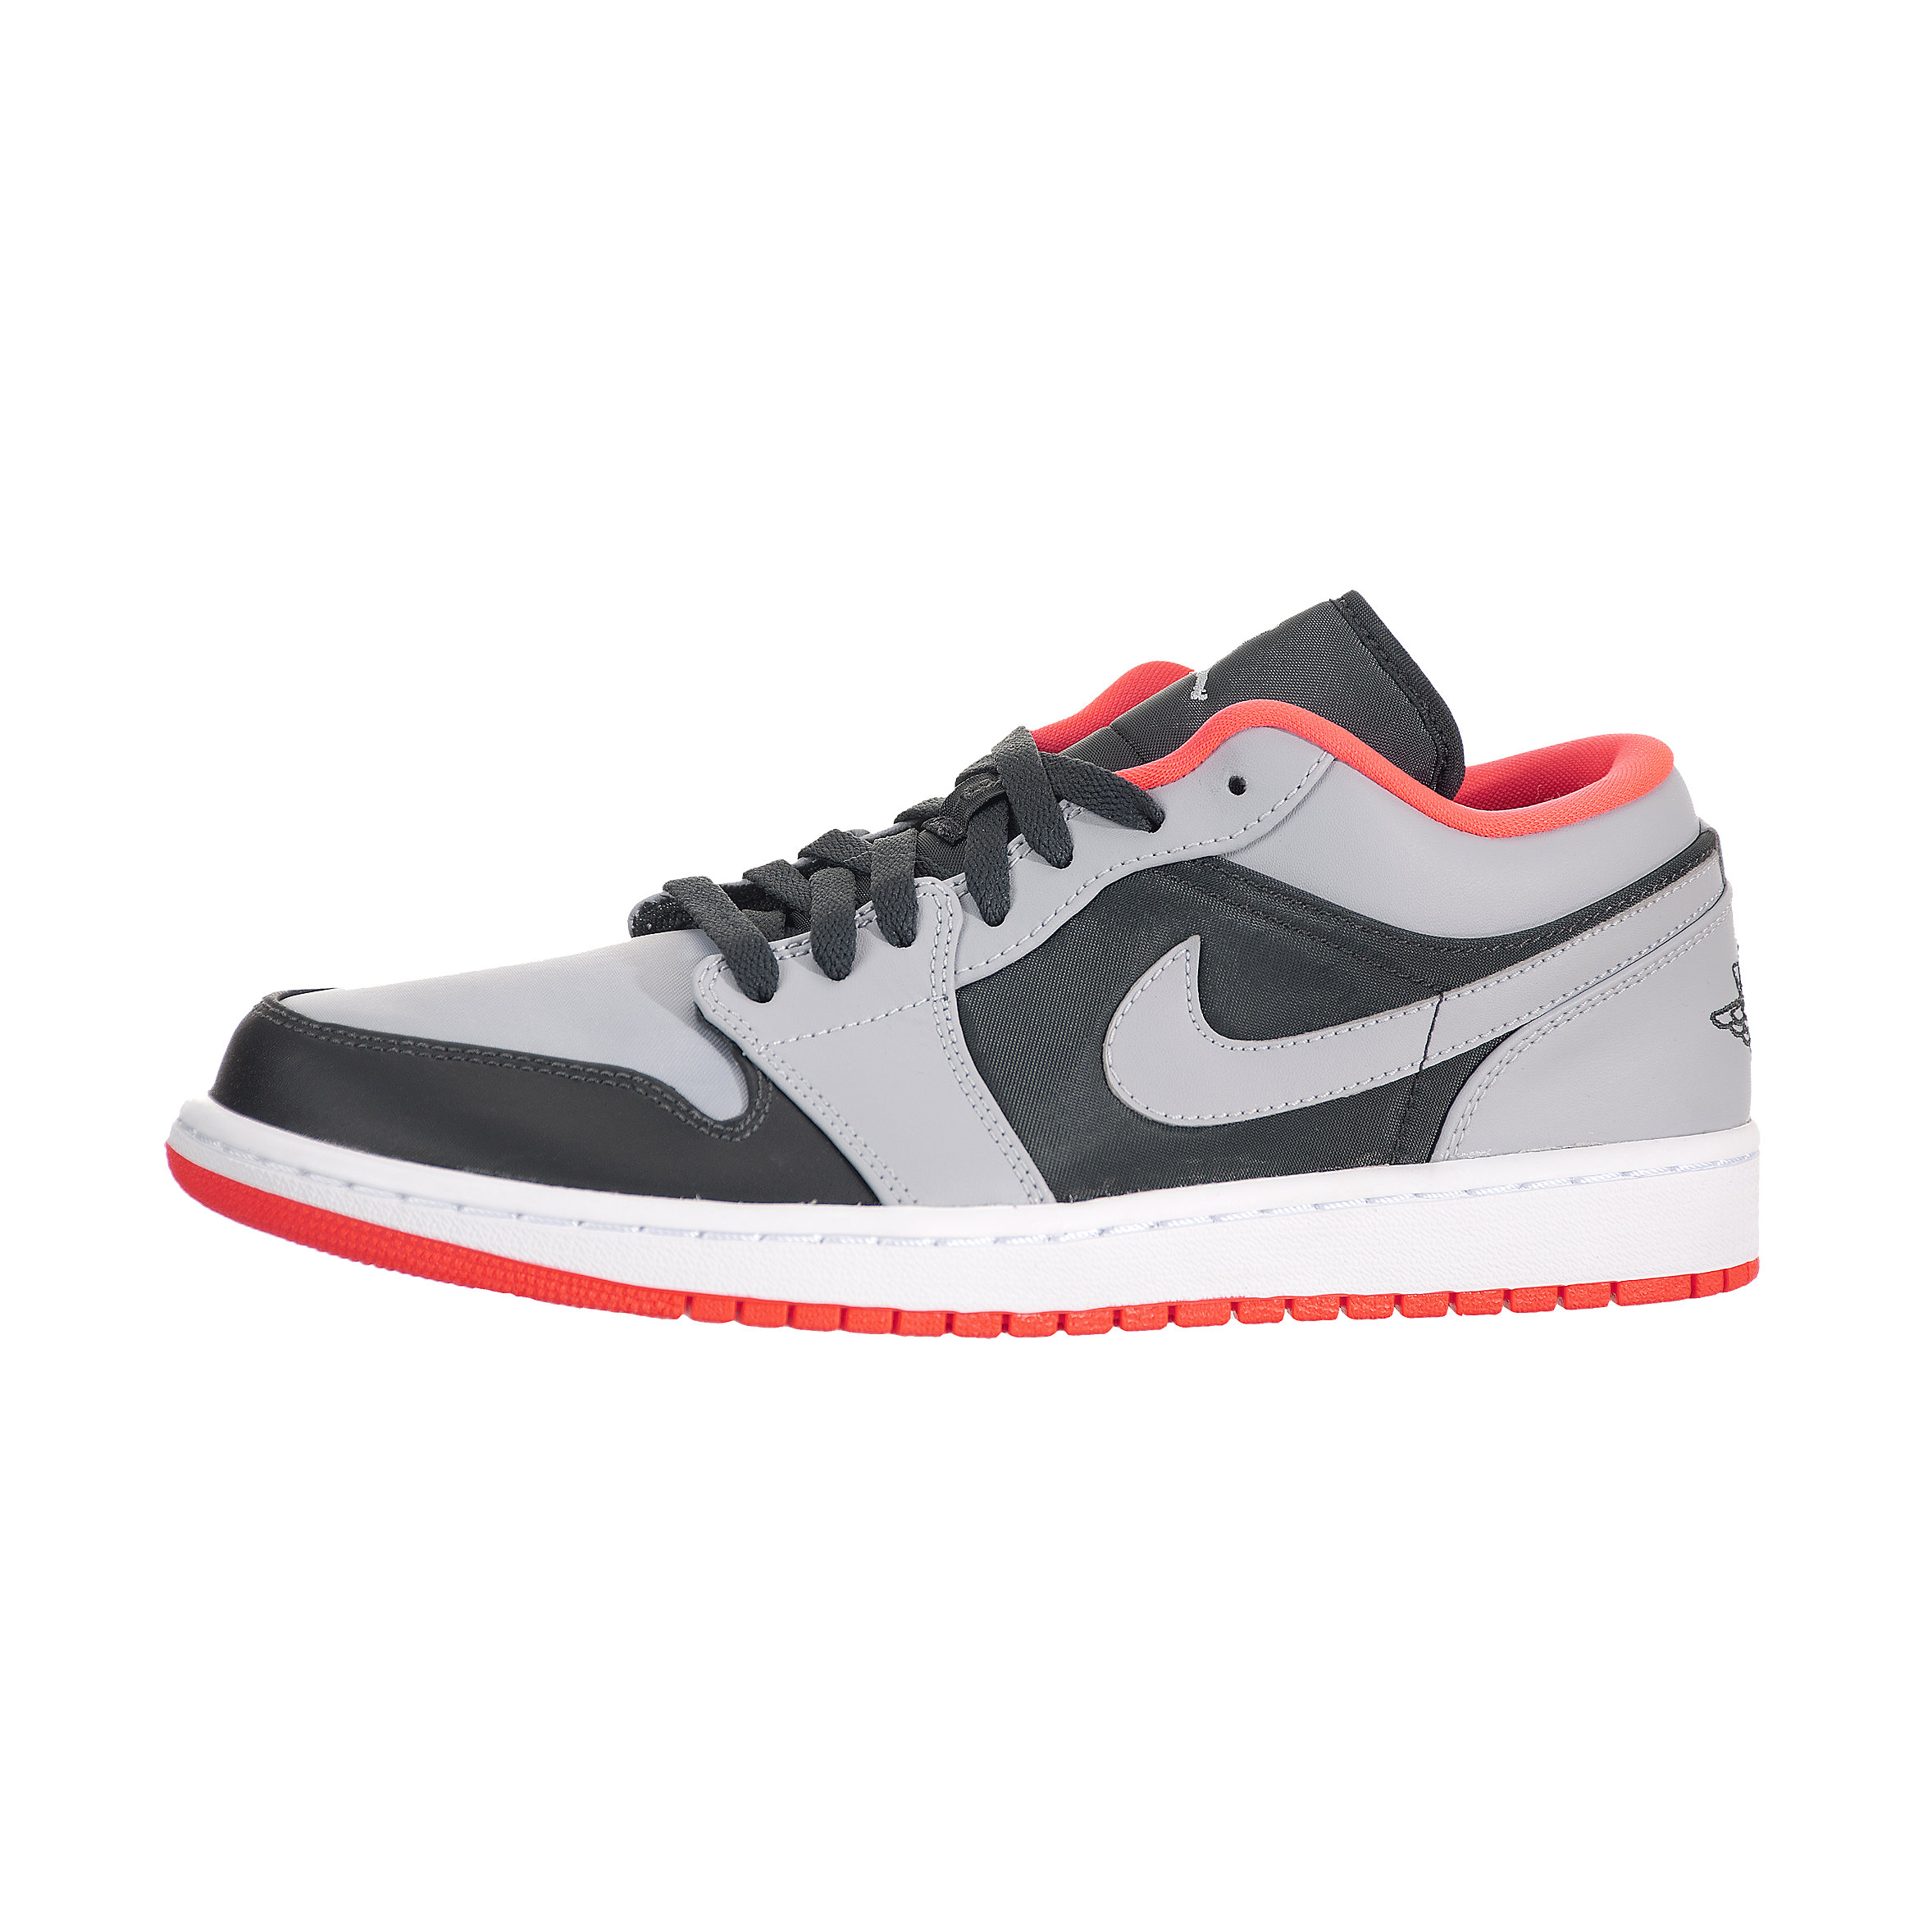 Air Jordan 1 Retro Low - $56.99 | Sneakerhead.com - 553558-022